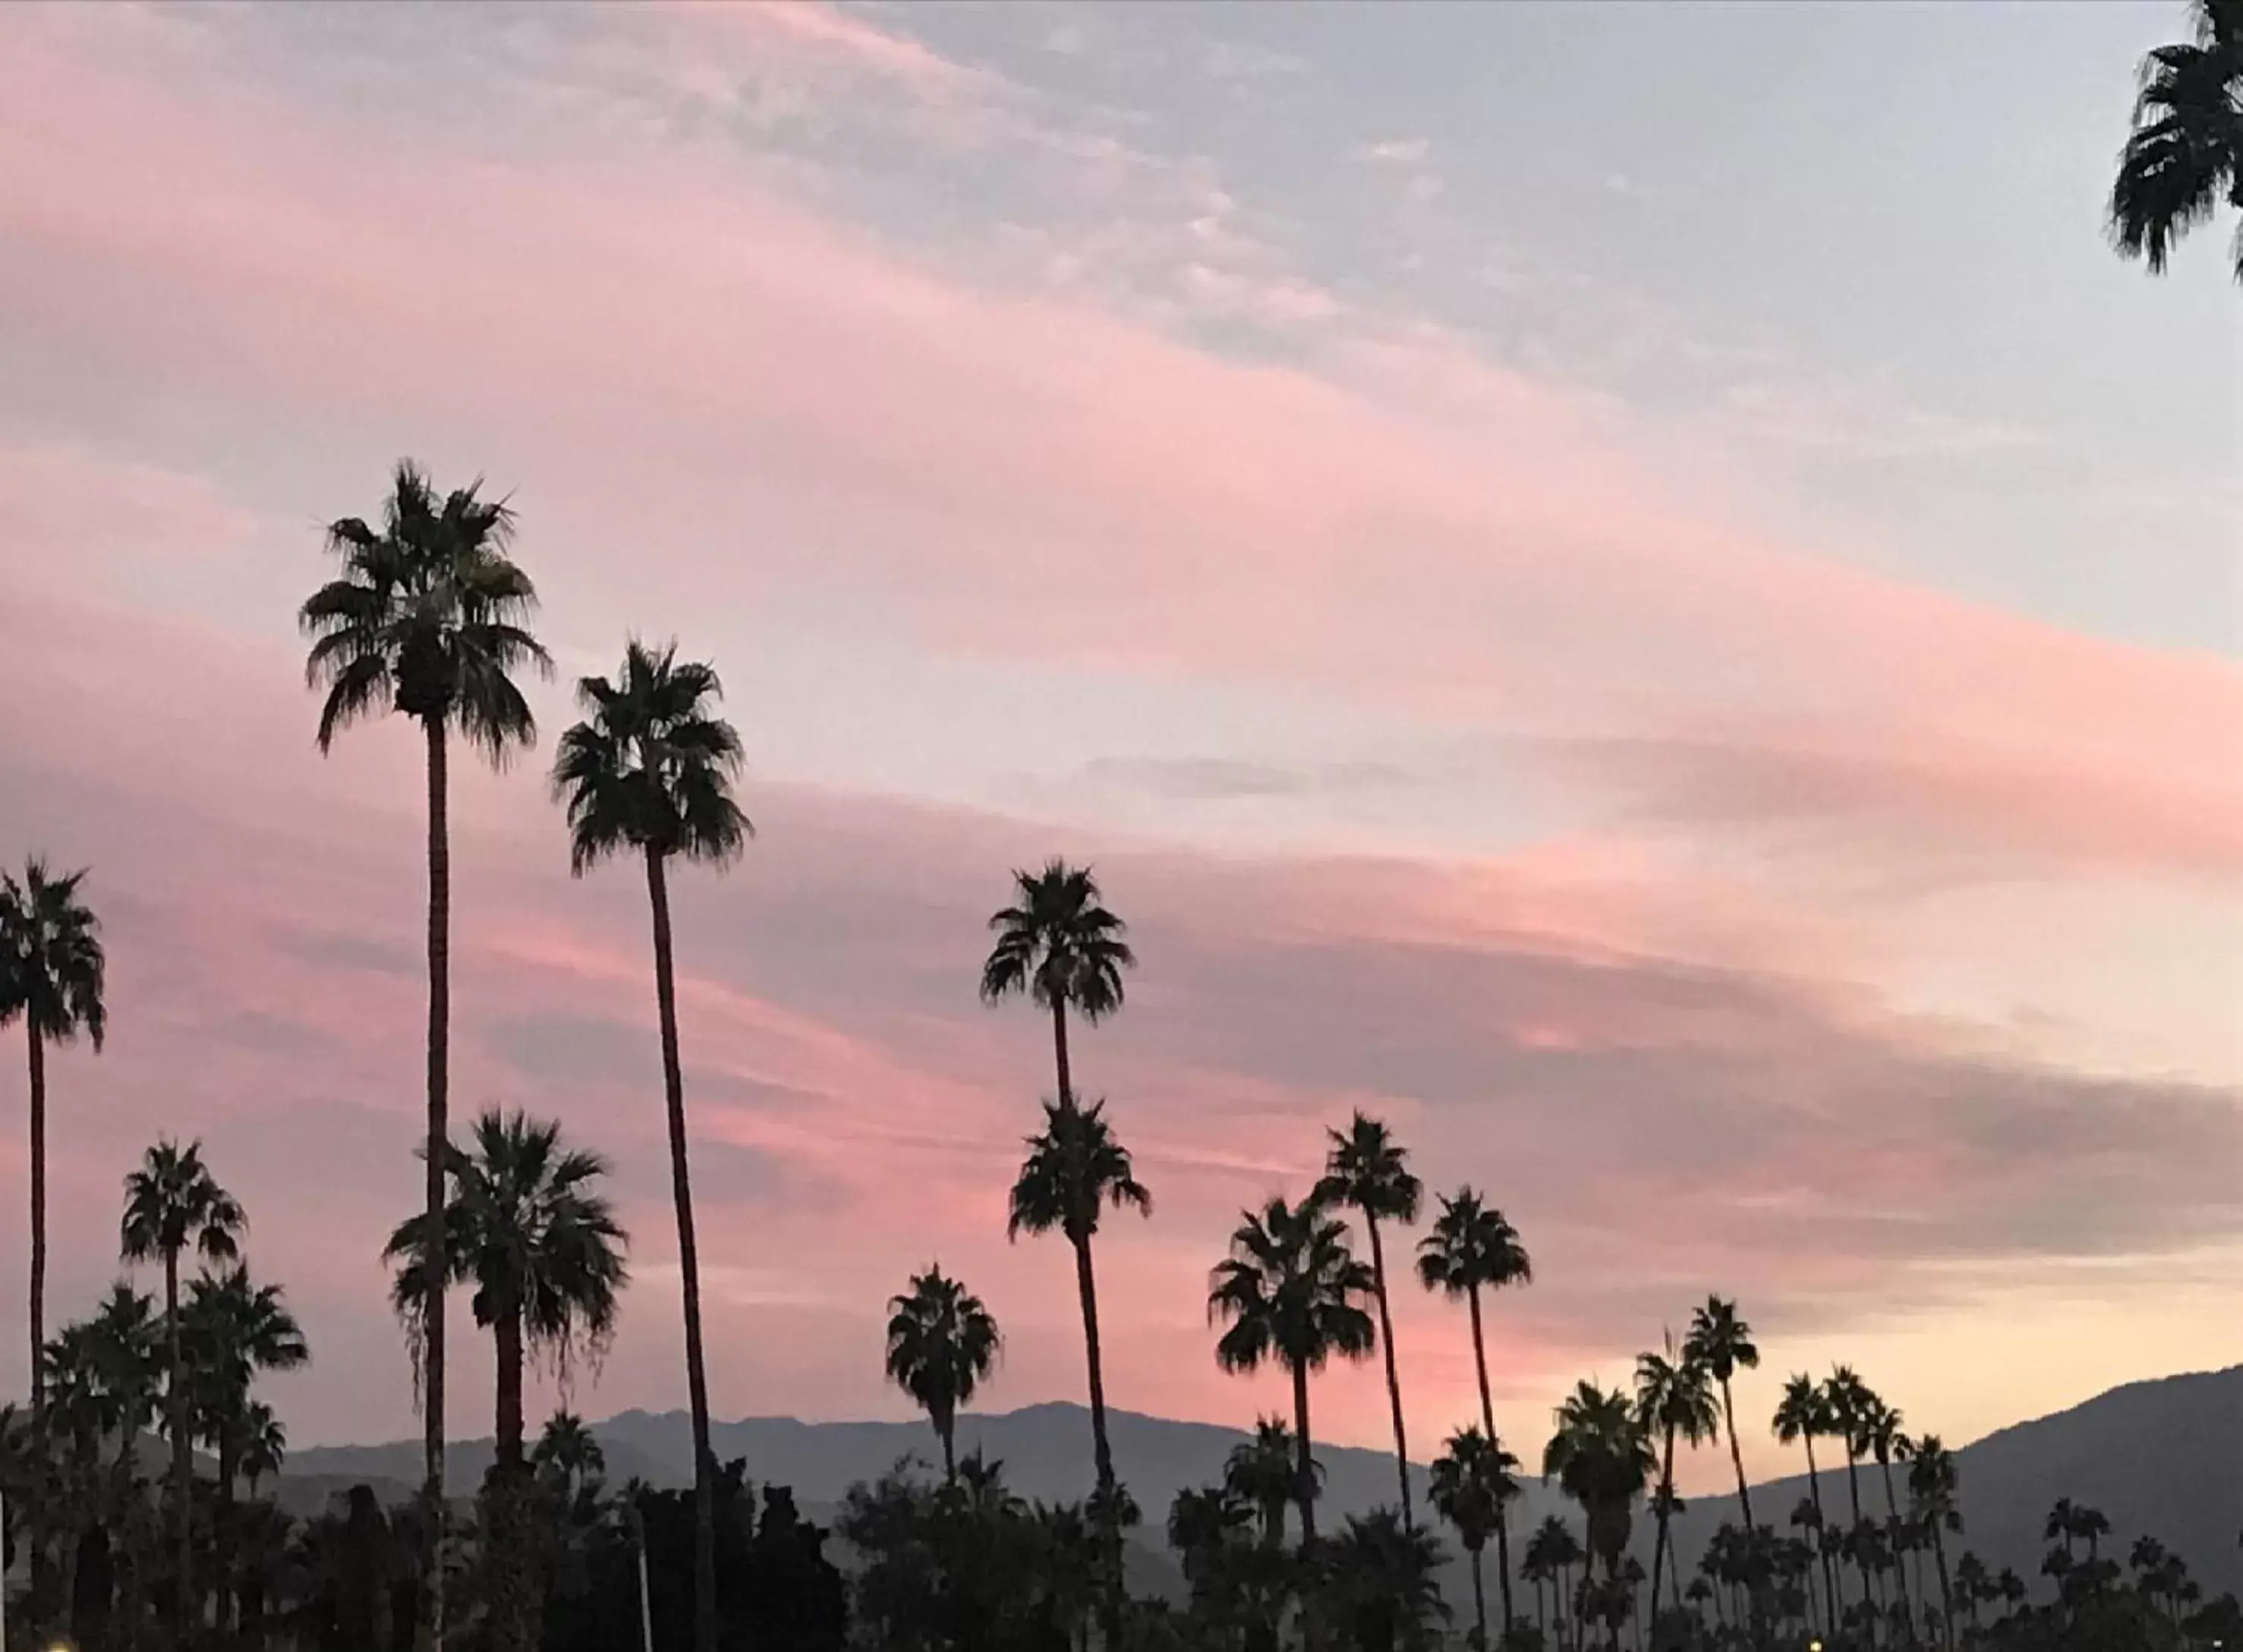 Street view, Sunrise/Sunset in Delos Reyes Palm Springs